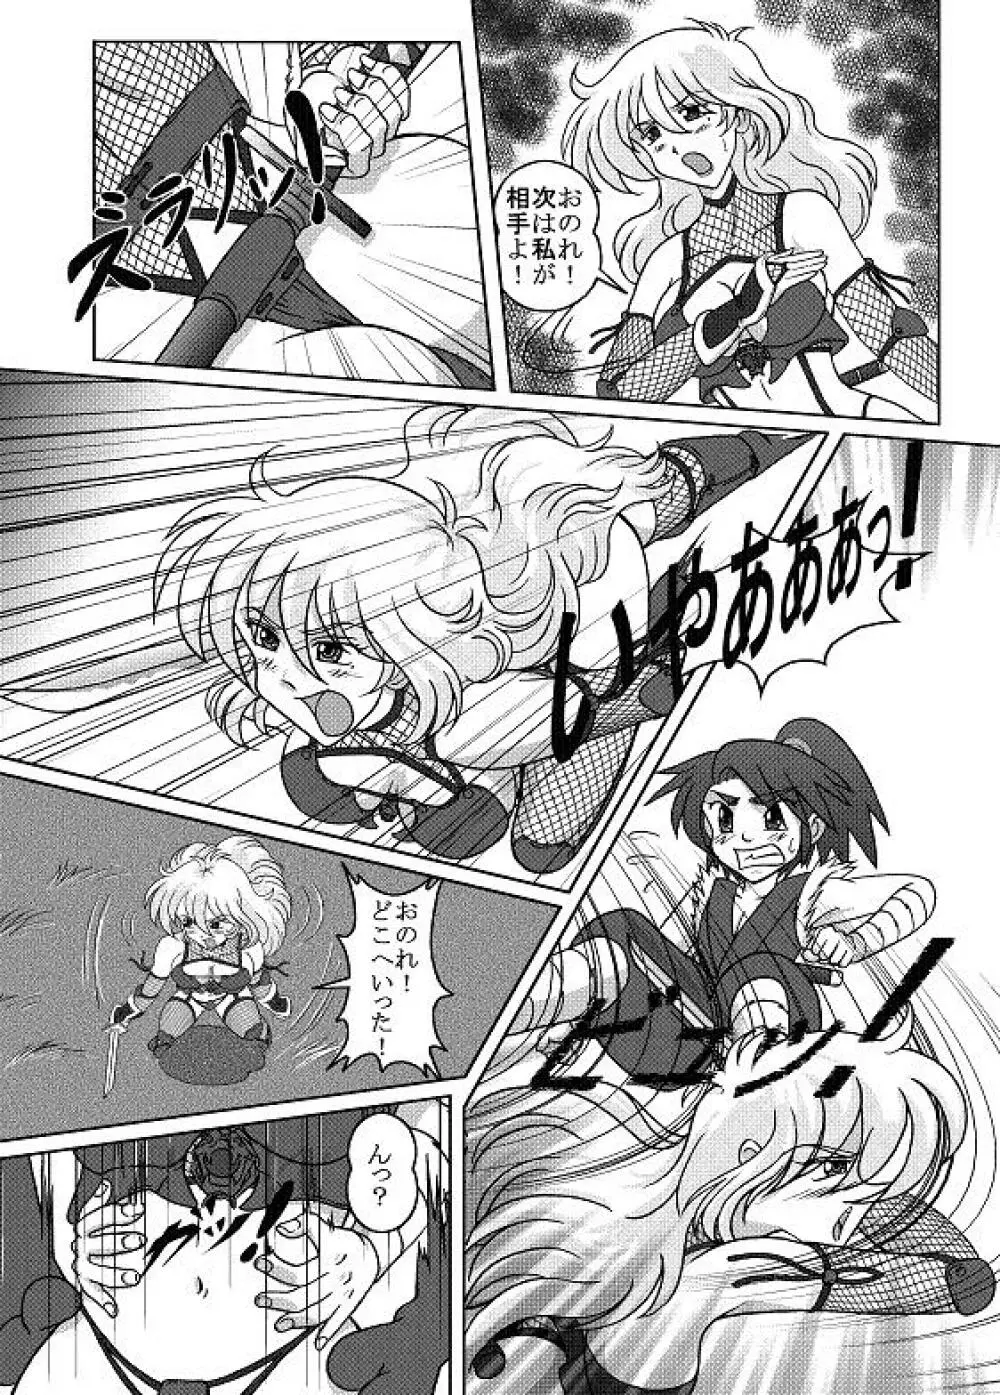 Same-themed manga about kid fighting female ninjas from japanese imageboard. 37ページ